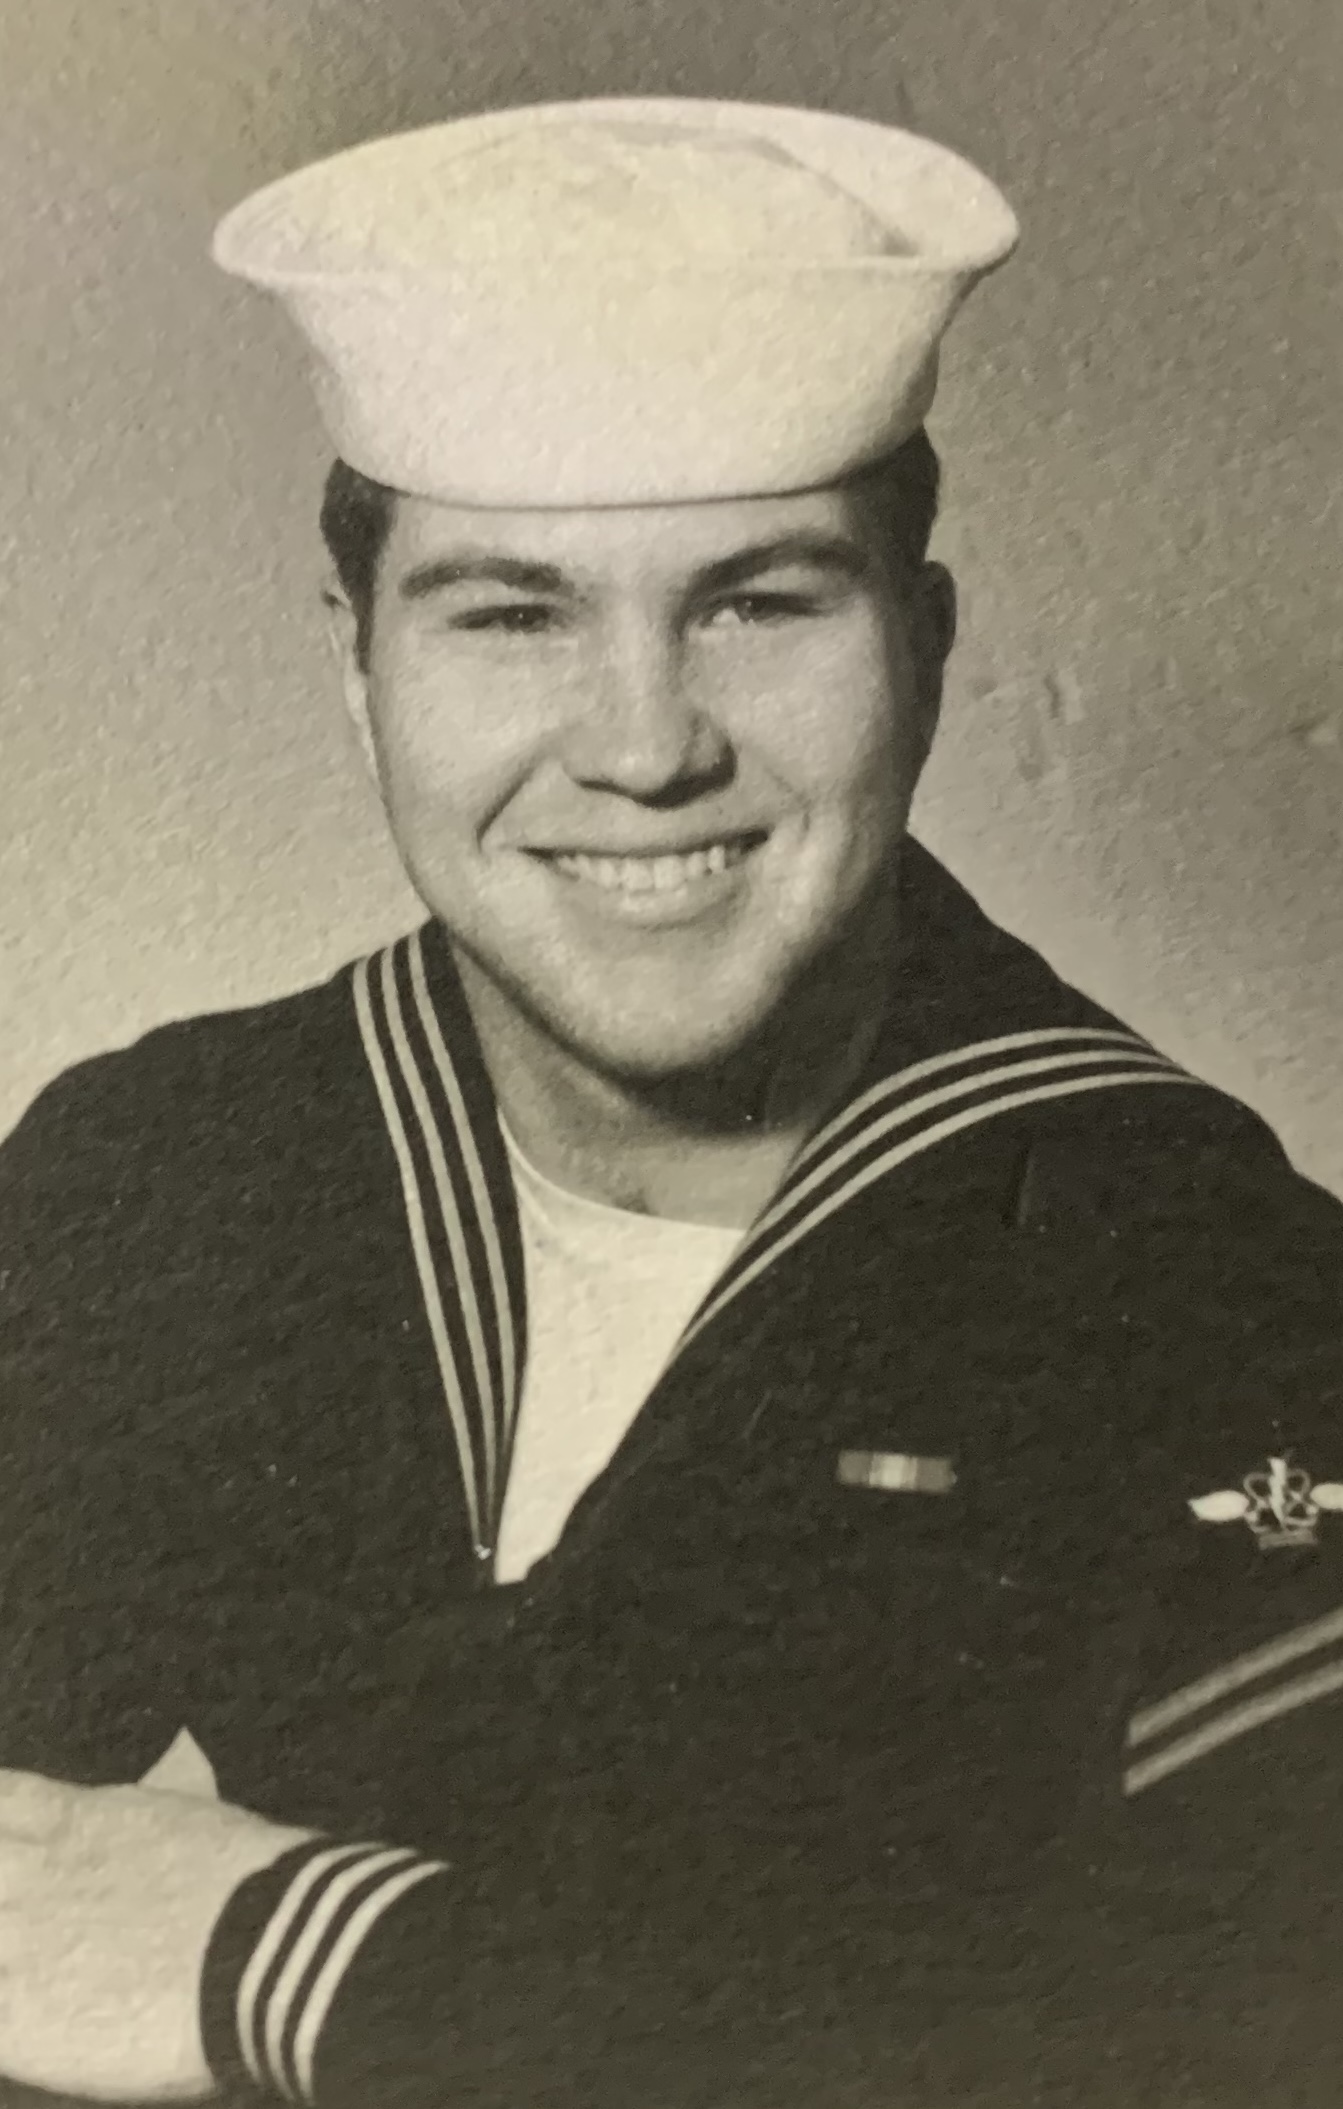 A U.S. Navy sailor in uniform